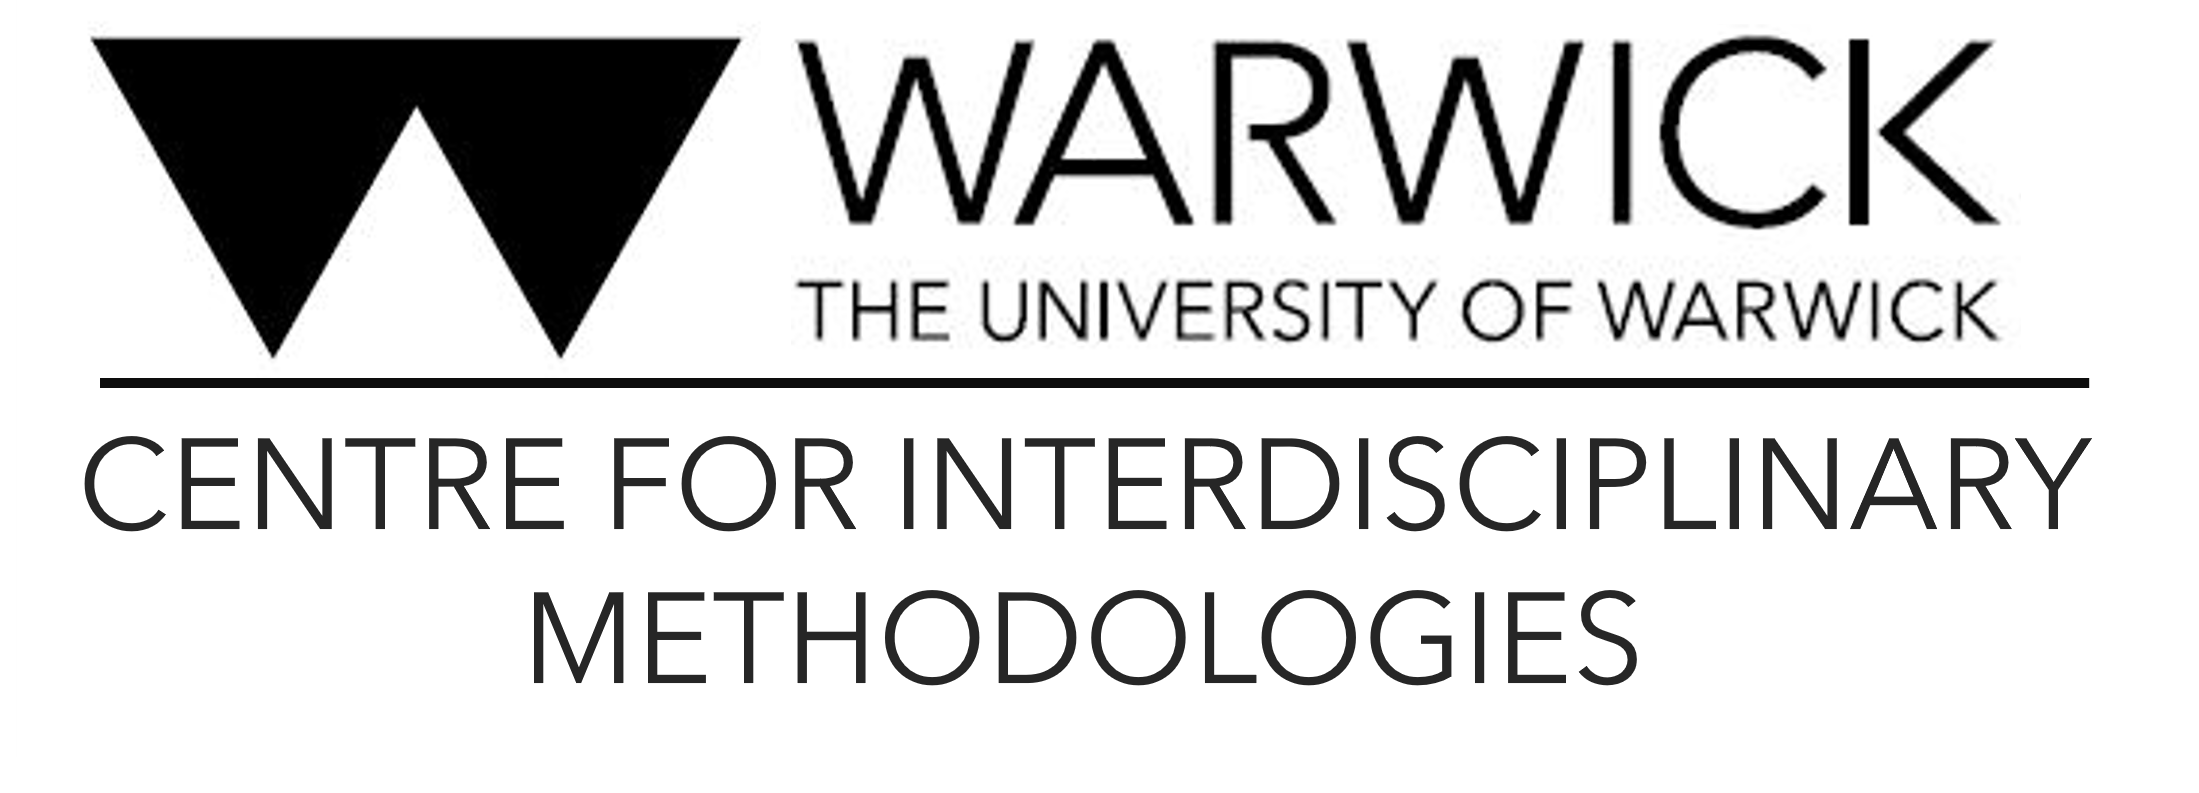 University of Warwick Centre for Interdisciplinary Methodologies (CIM)